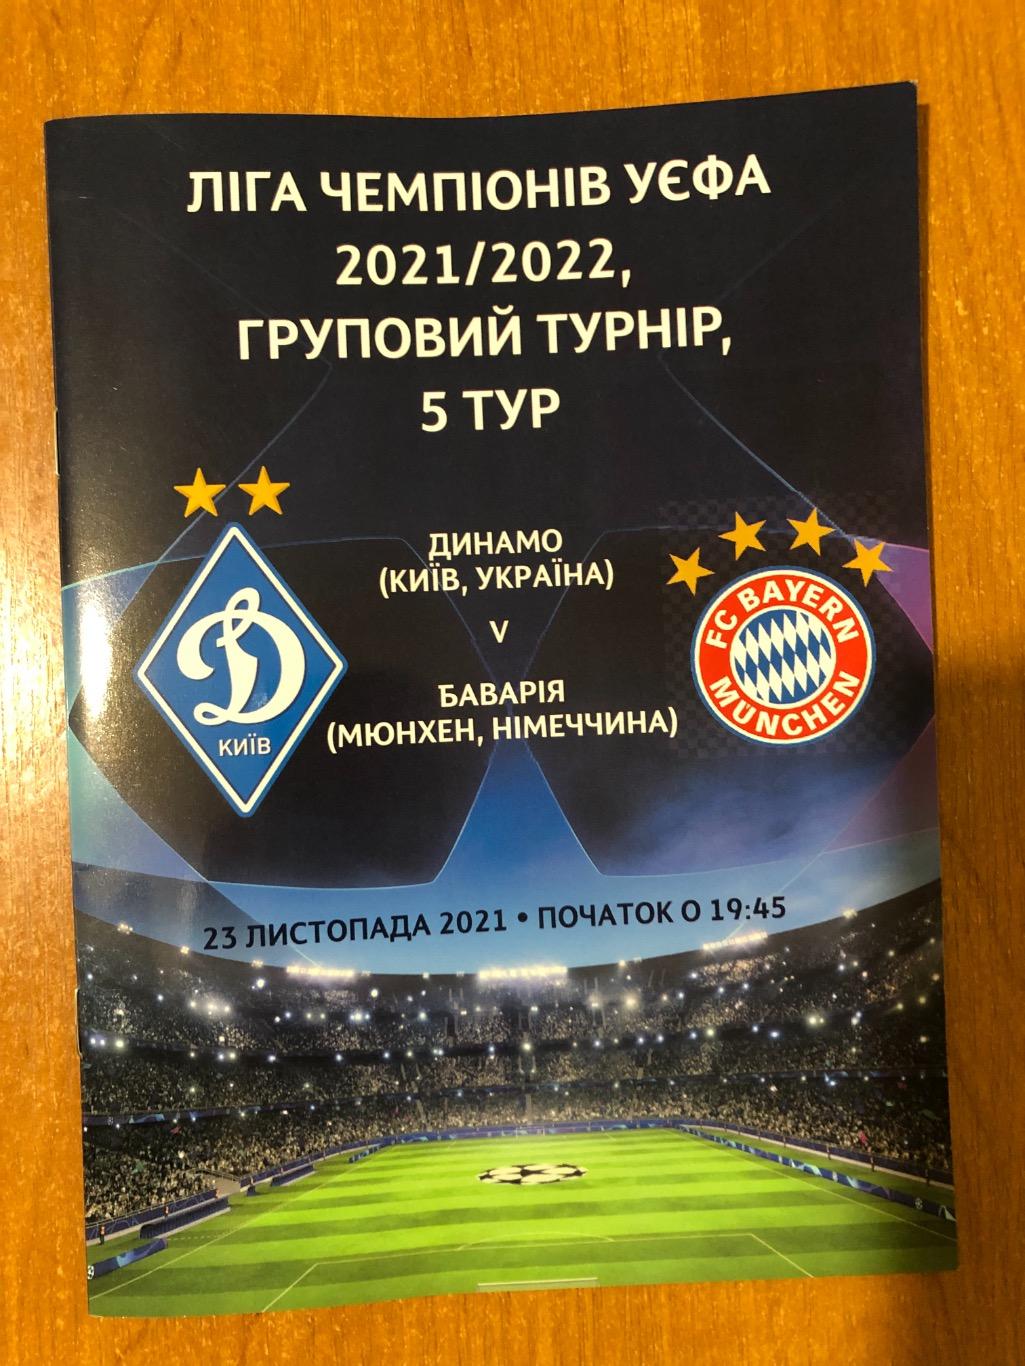 Динамо Киев - Бавария. 23.11.2021.